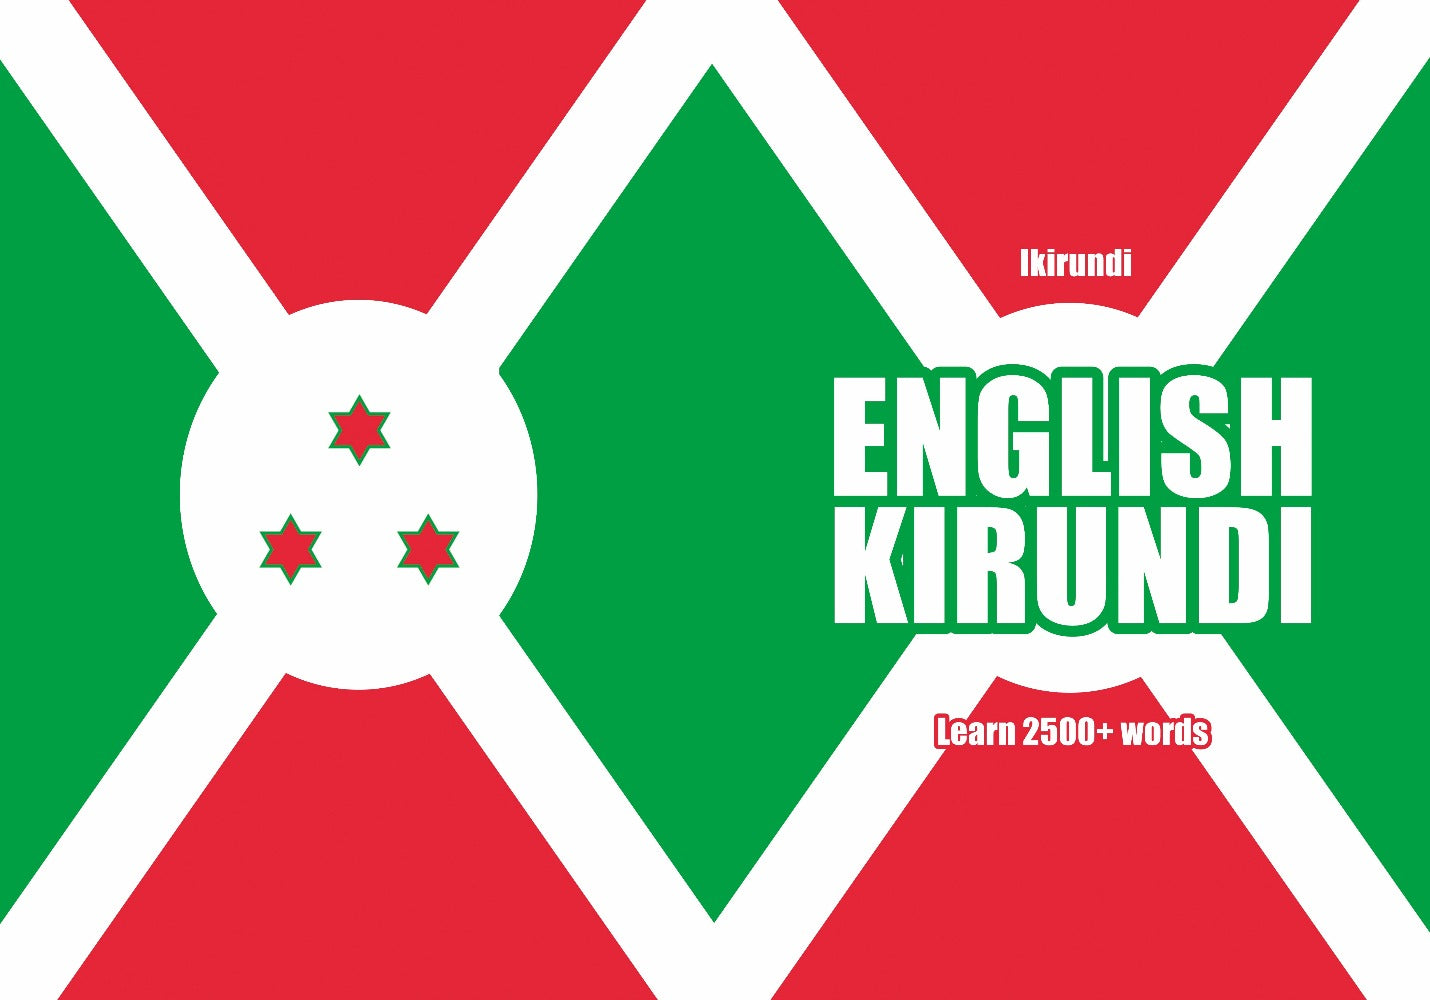 Kirundi language learning notebook cover